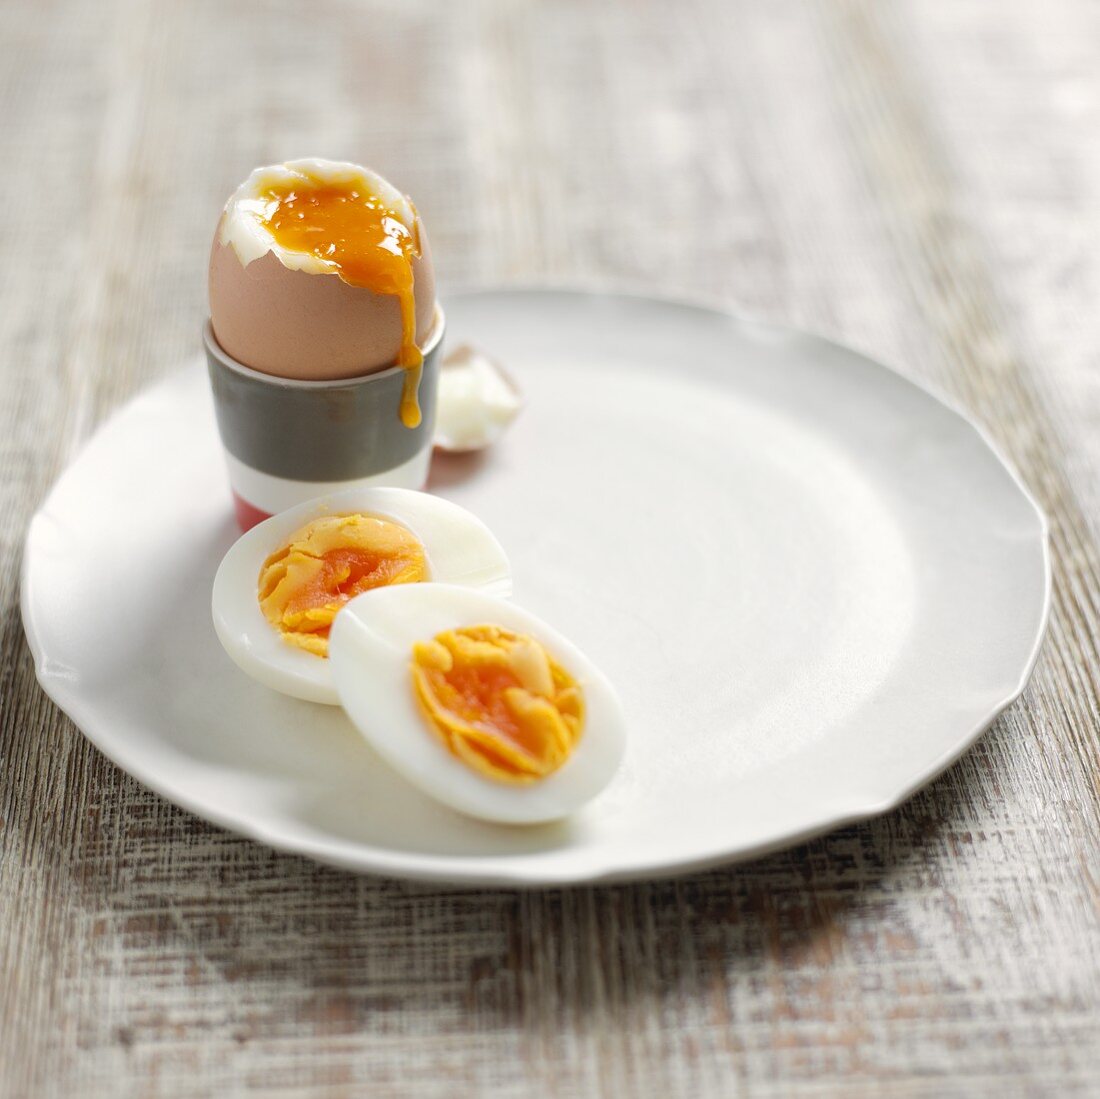 A hard-boiled egg and a soft-boiled egg